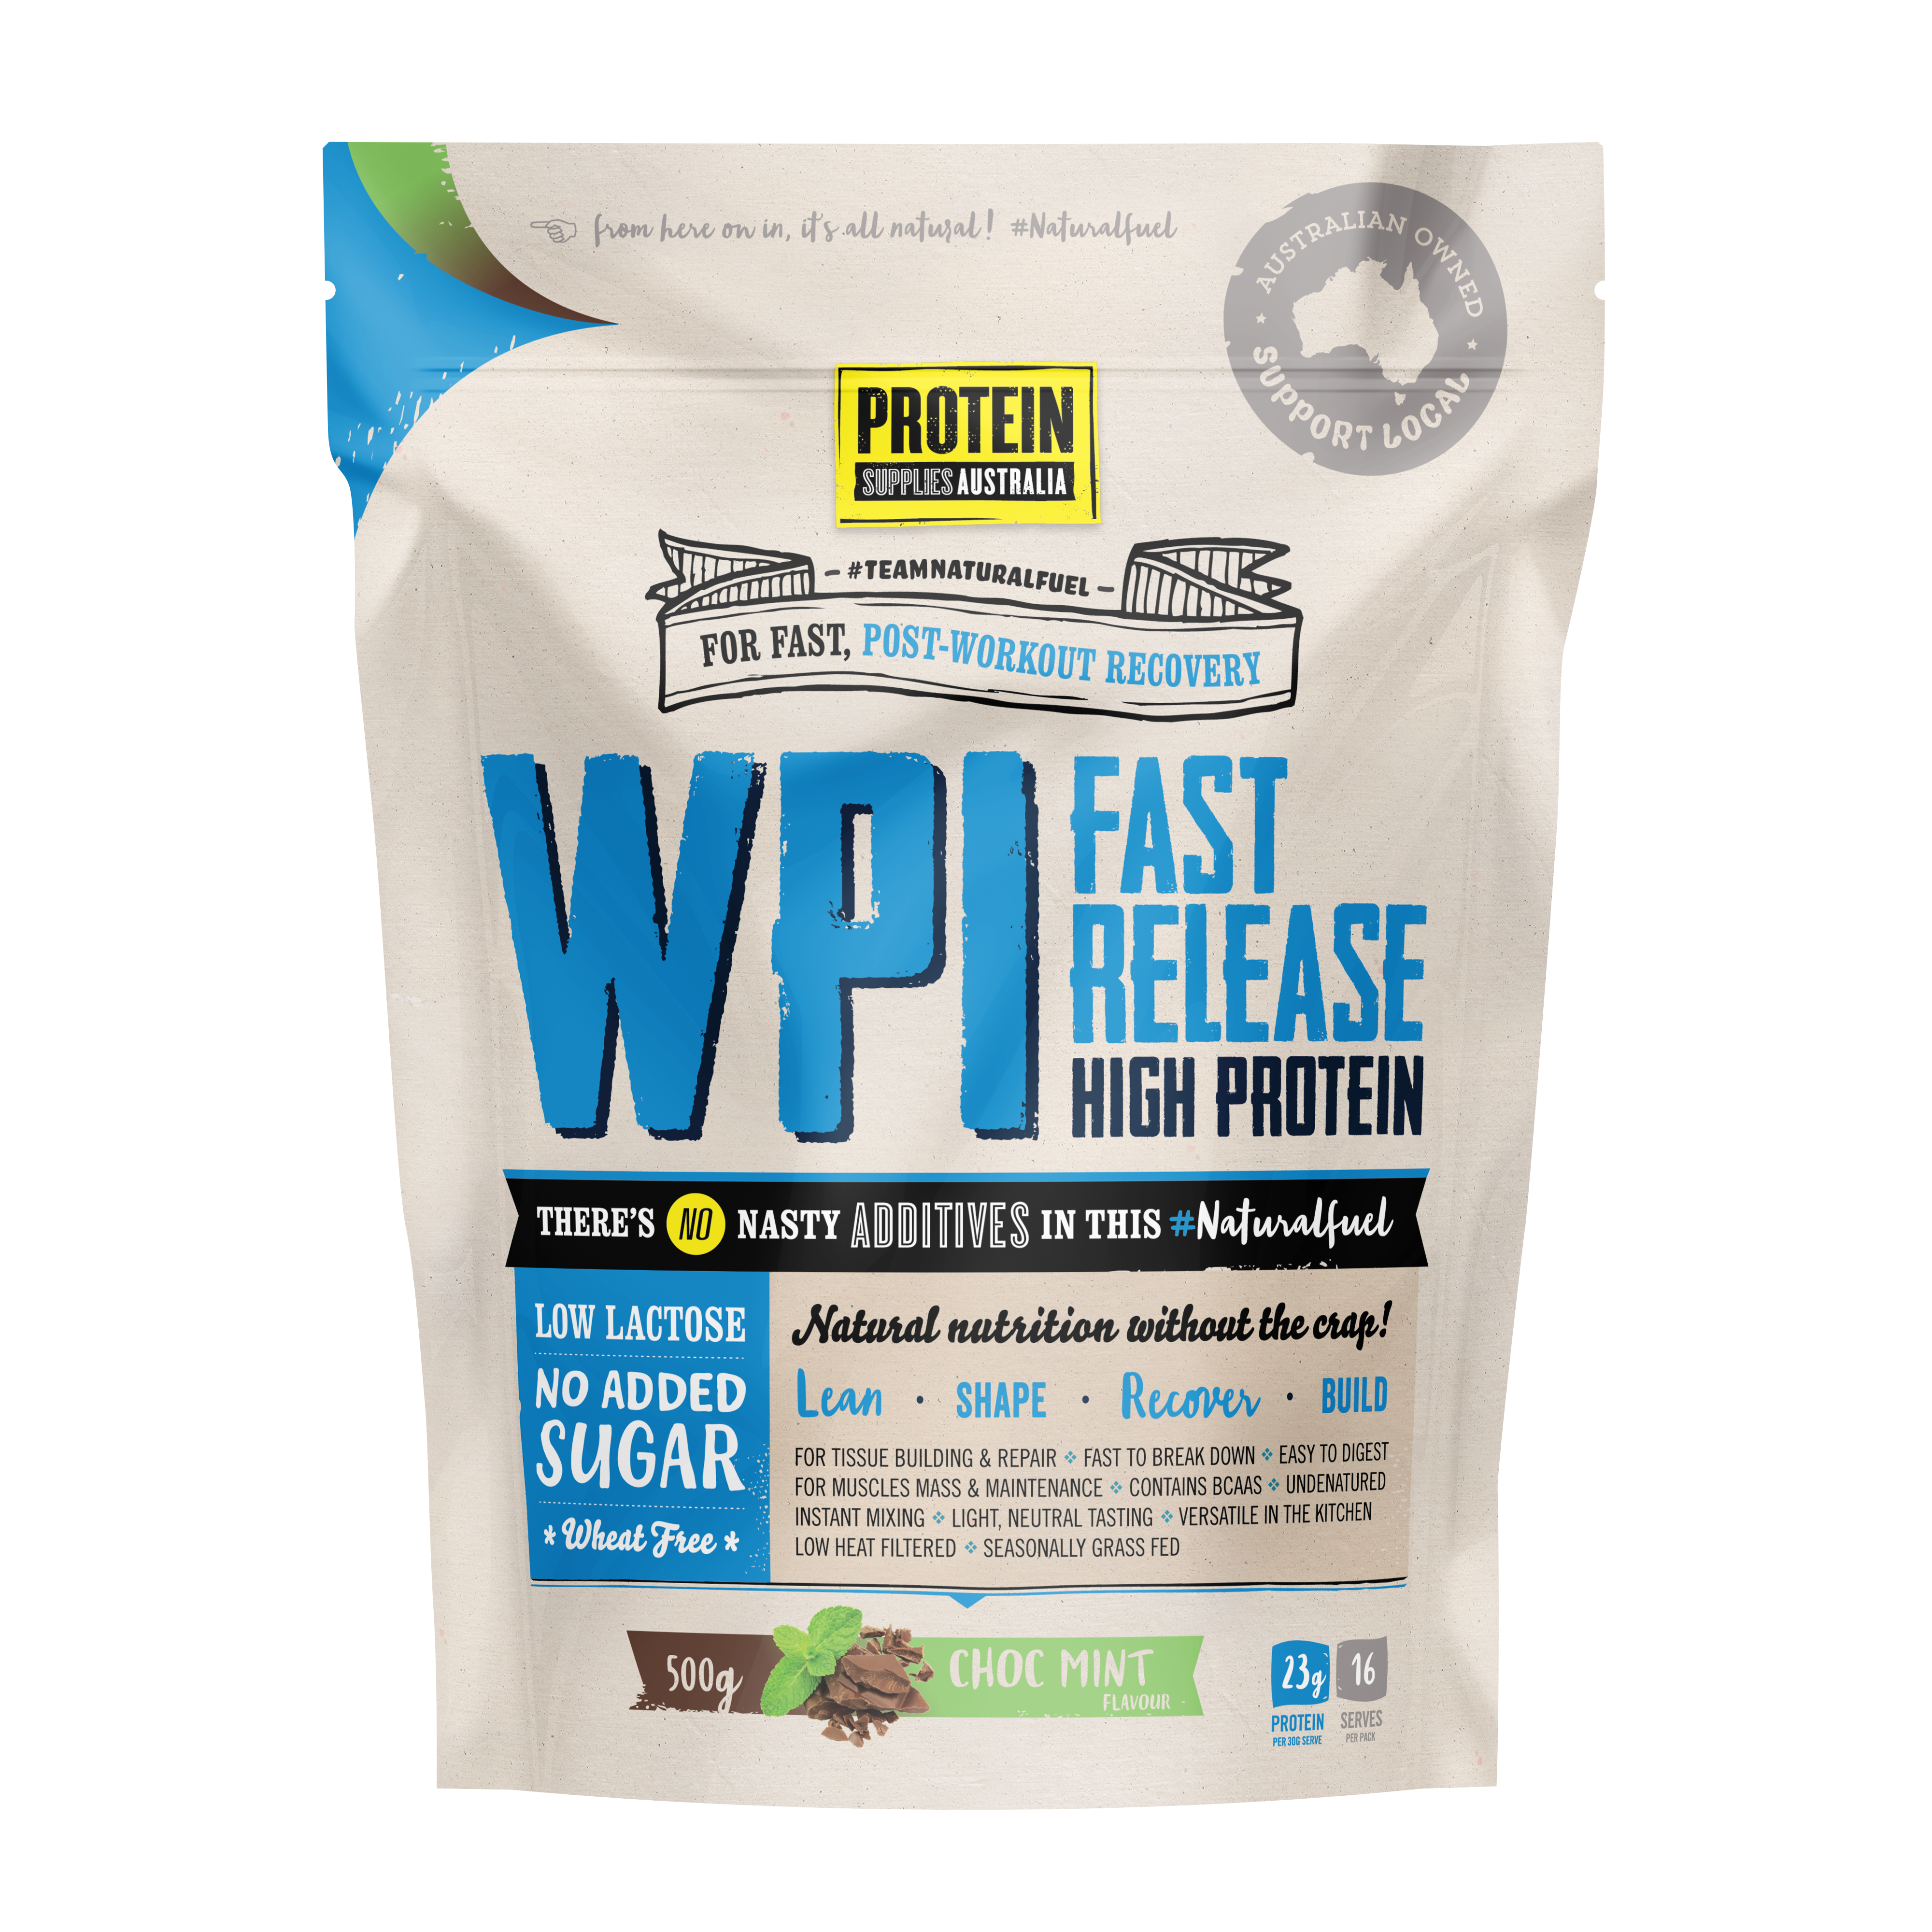 Protein Supplies Aust. Wpi (Whey Protein Isolate) Choc Mint 1Kg